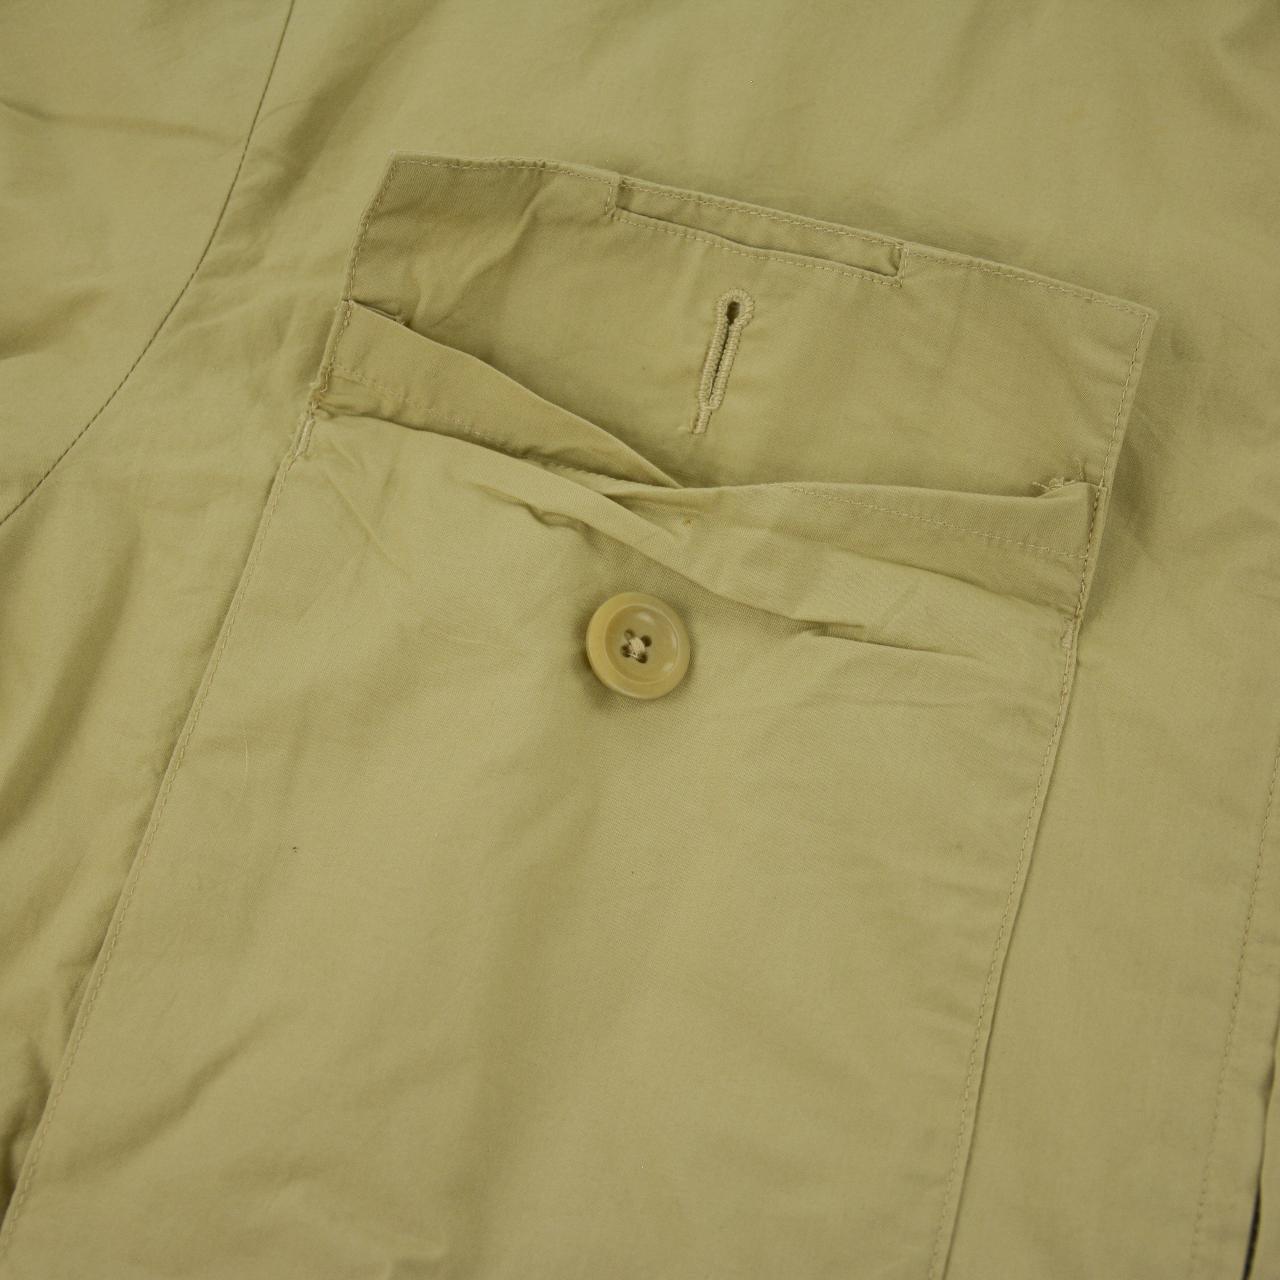 Vintage DKNY Zip Up Jacket Size L - Known Source